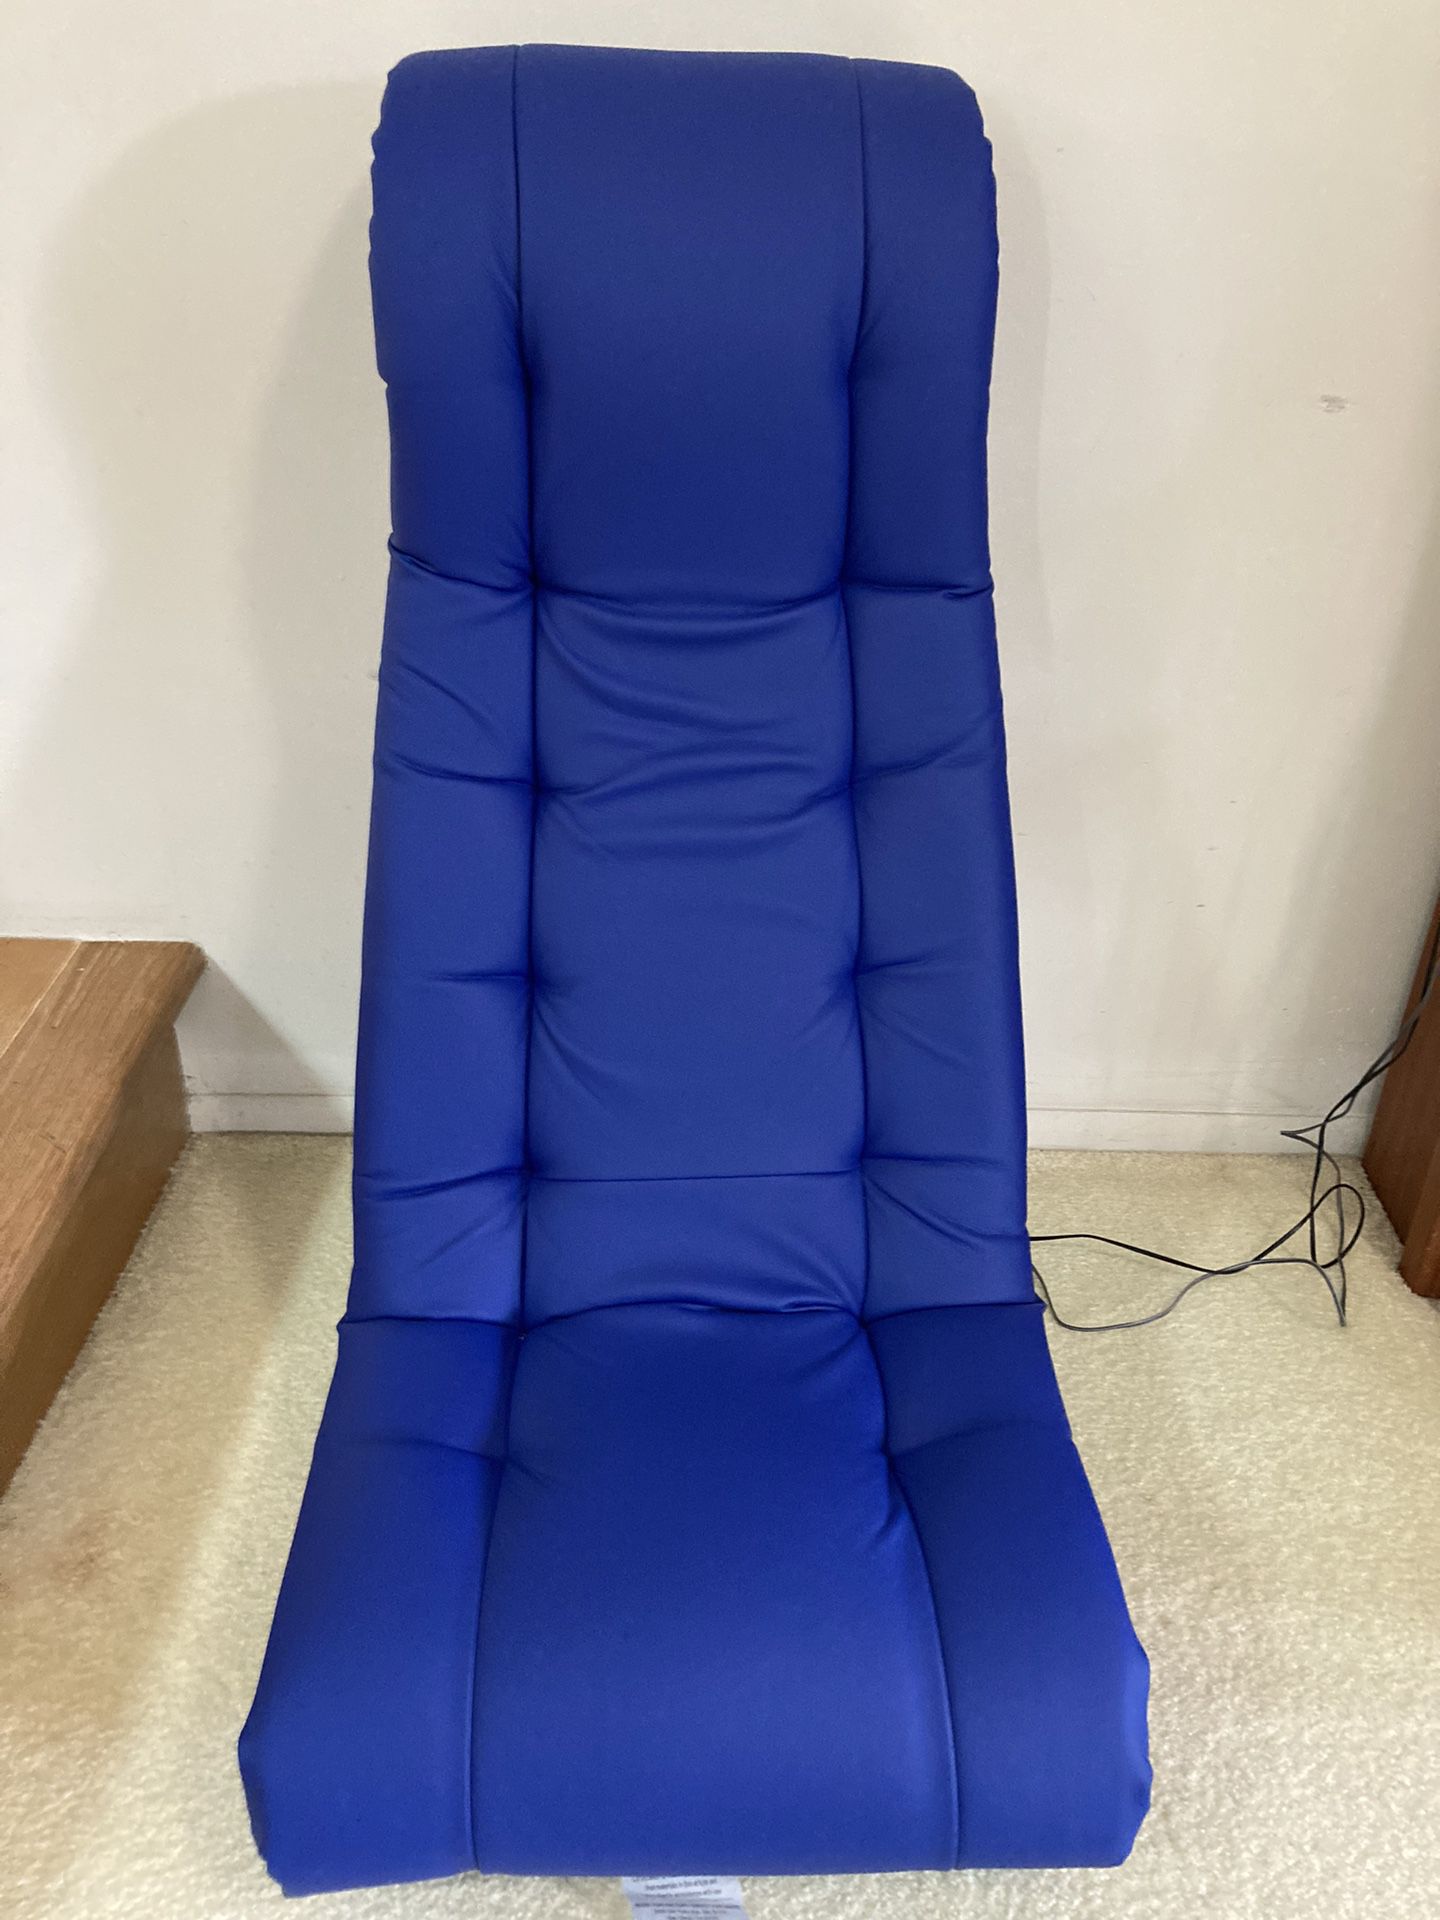 Soft Floor Rocker Cushioned Ground Chair (blue)